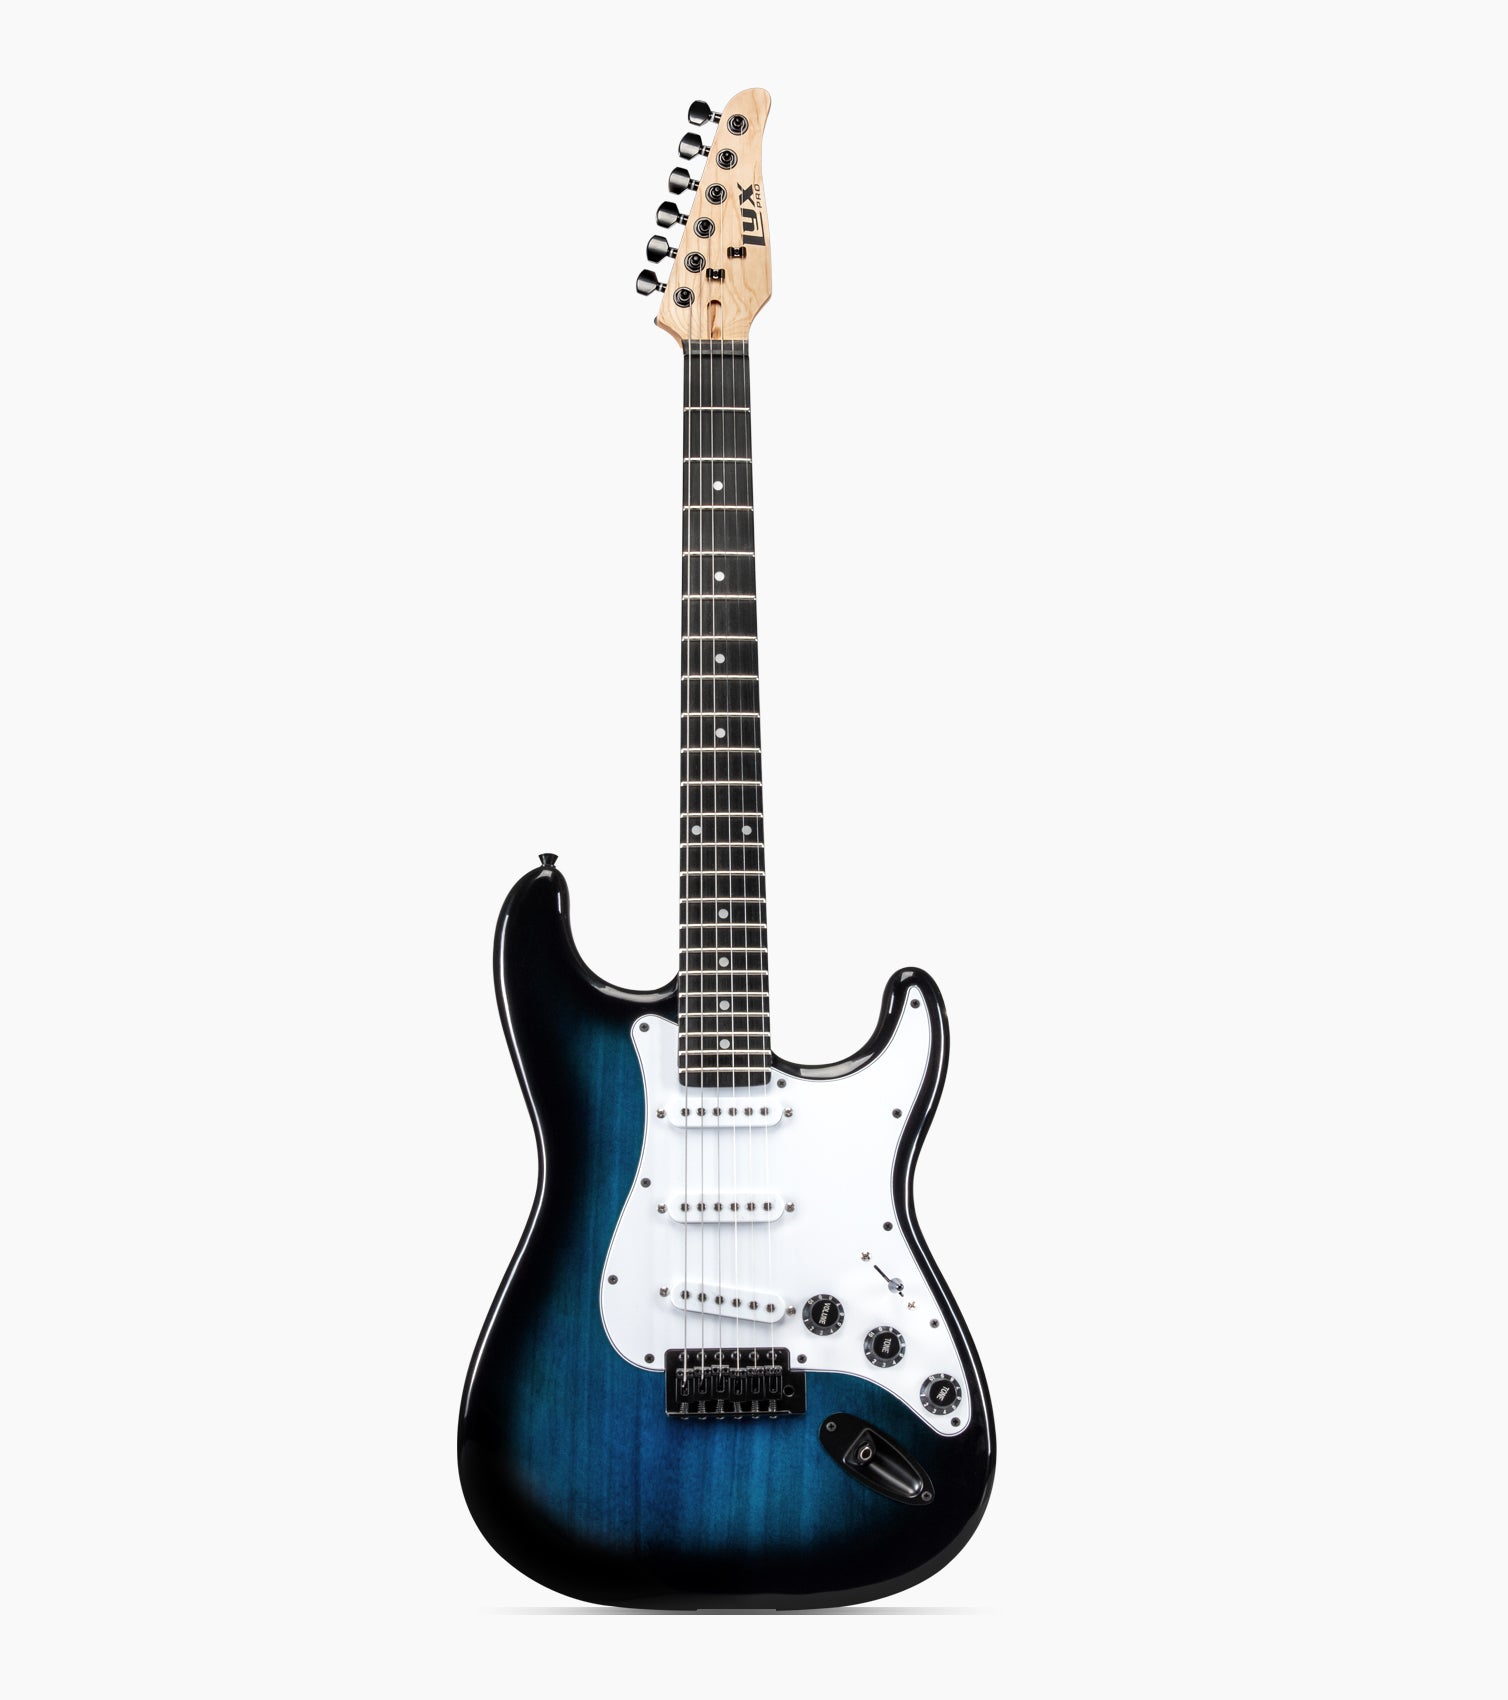 Blue double-cutaway beginner electric guitar